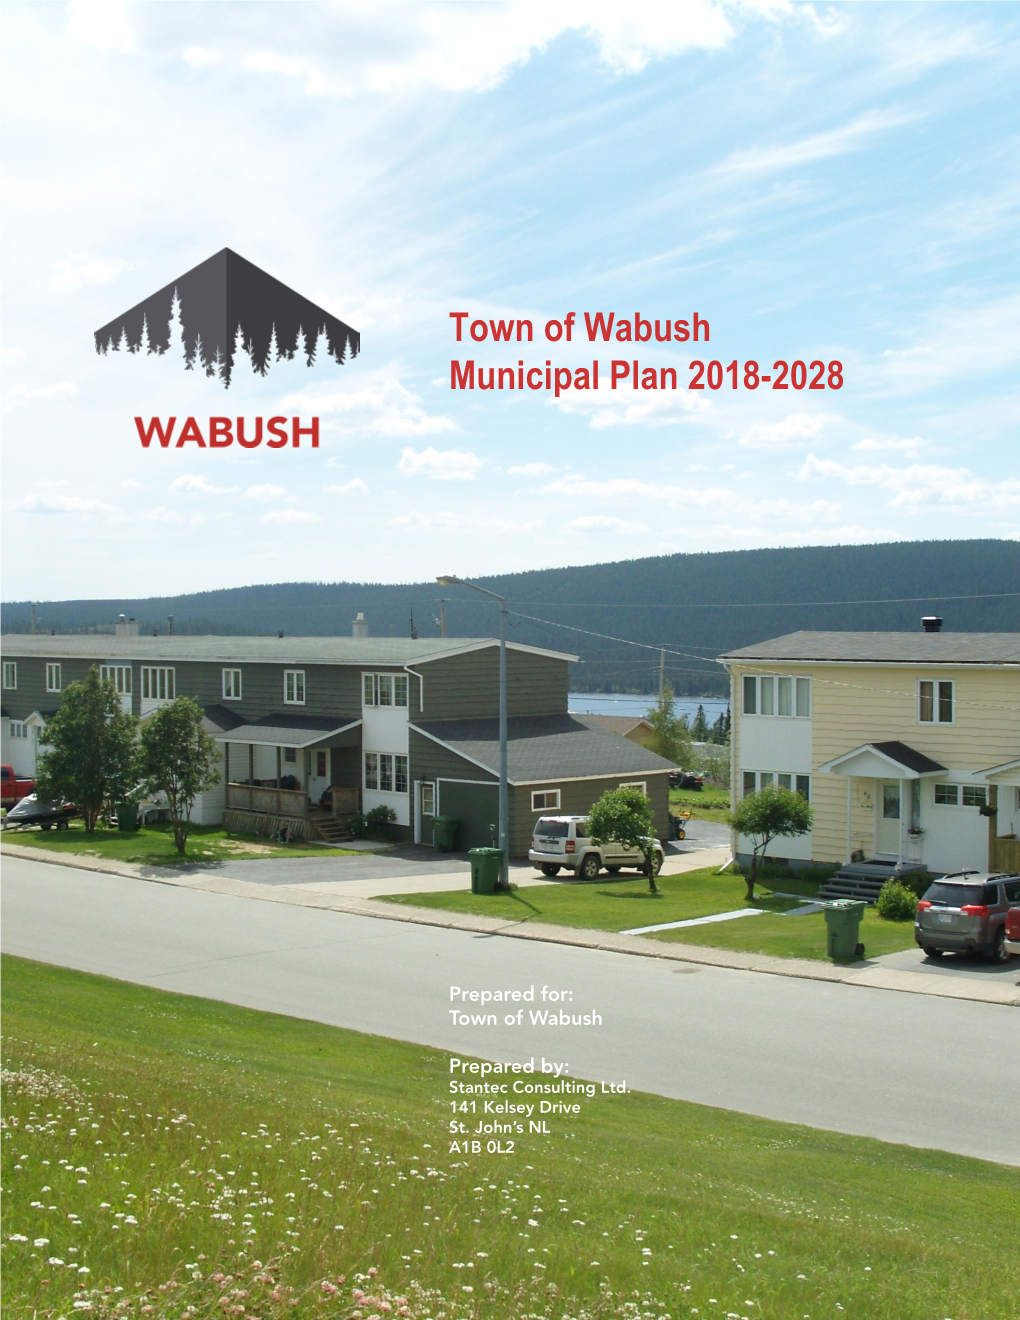 Town of Wabush Municipal Plan 2018-2028